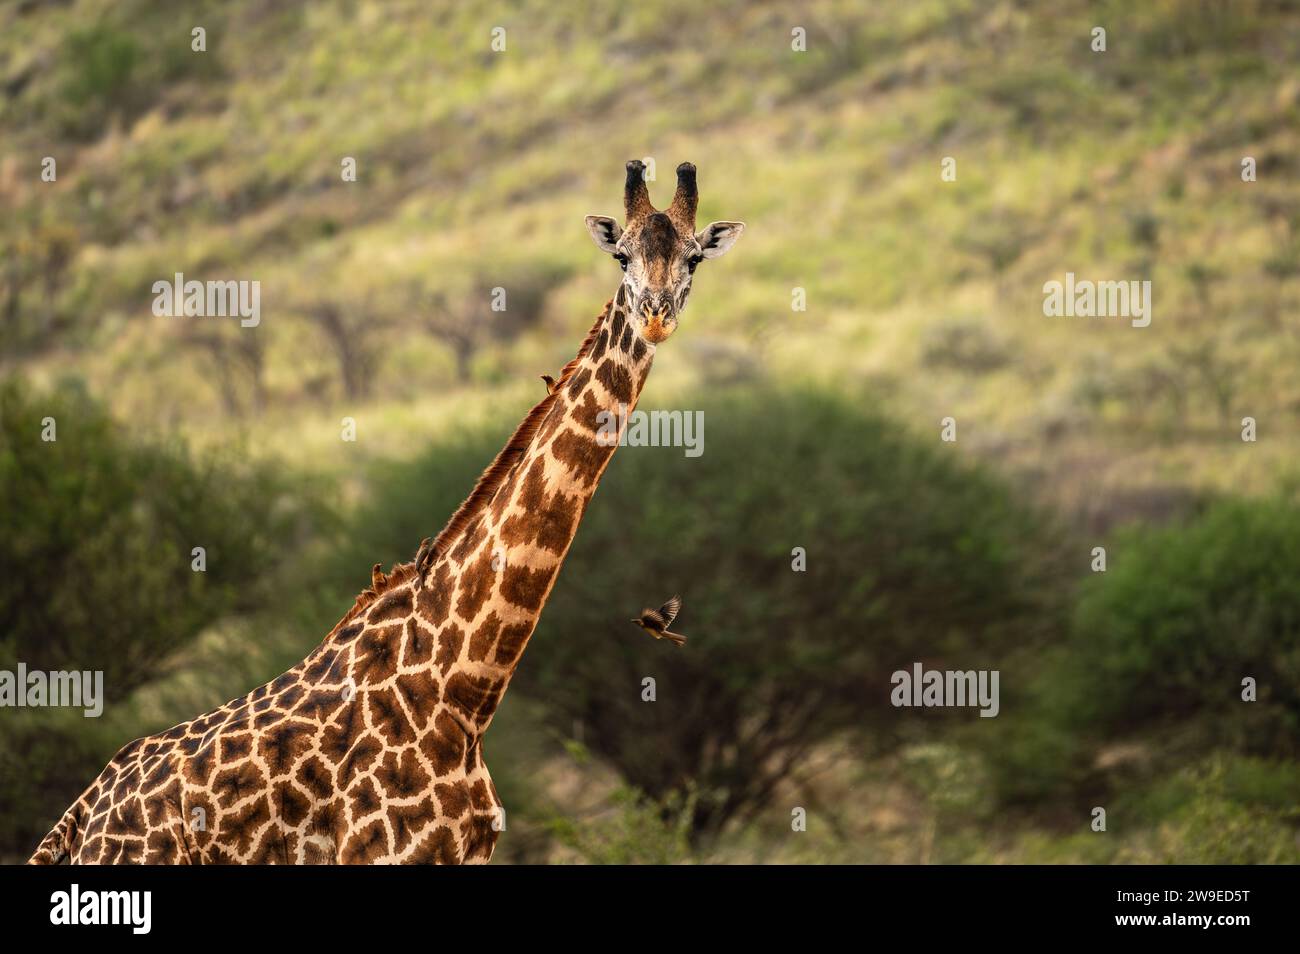 giraffe looking into camera with birds flying around Stock Photo